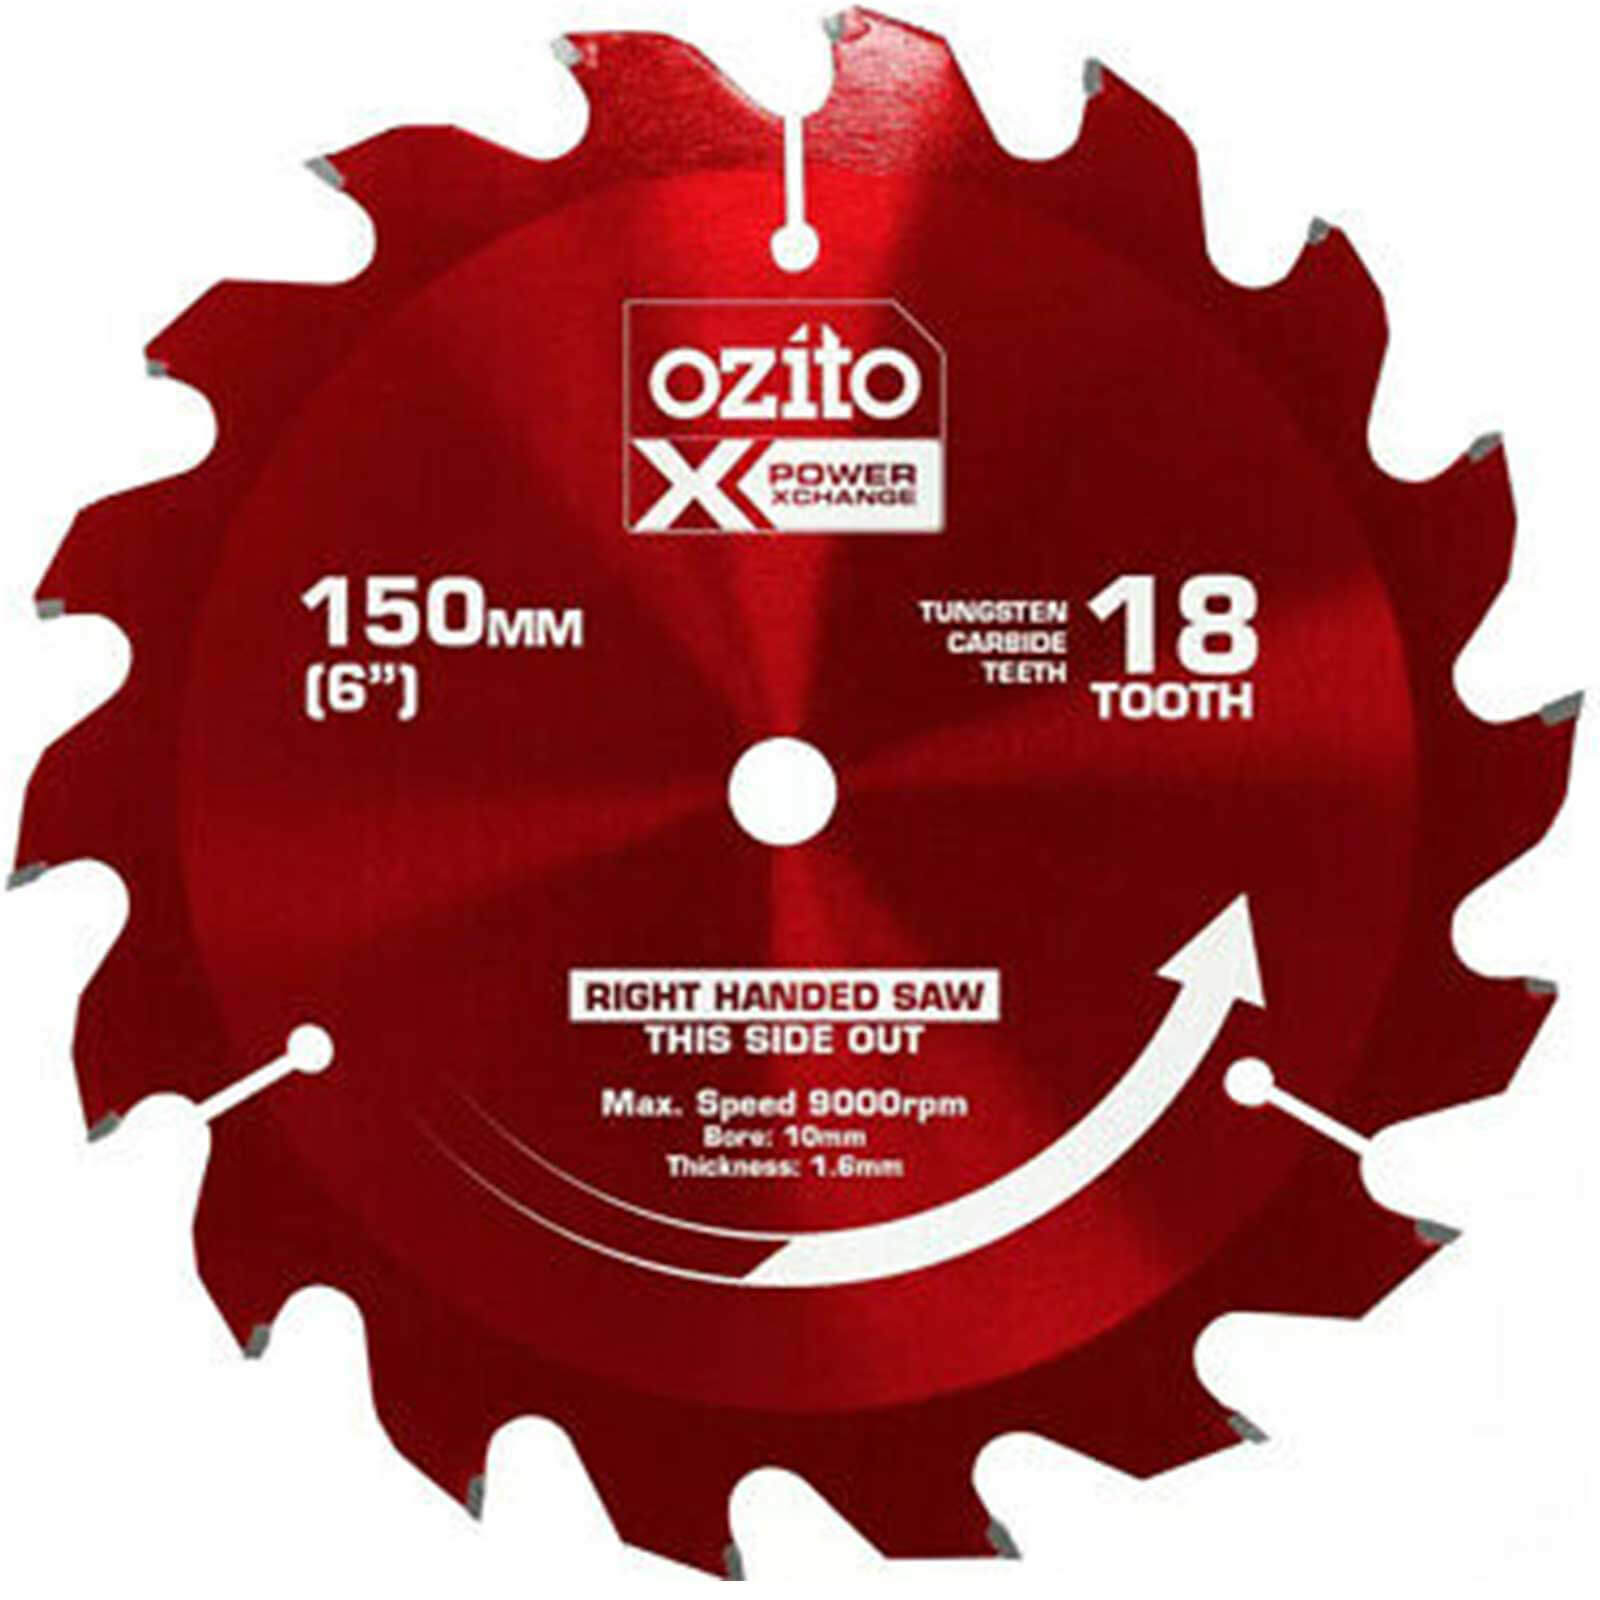 Image of Ozito PXCSB Circular Saw Blade 150mm 18T 10mm